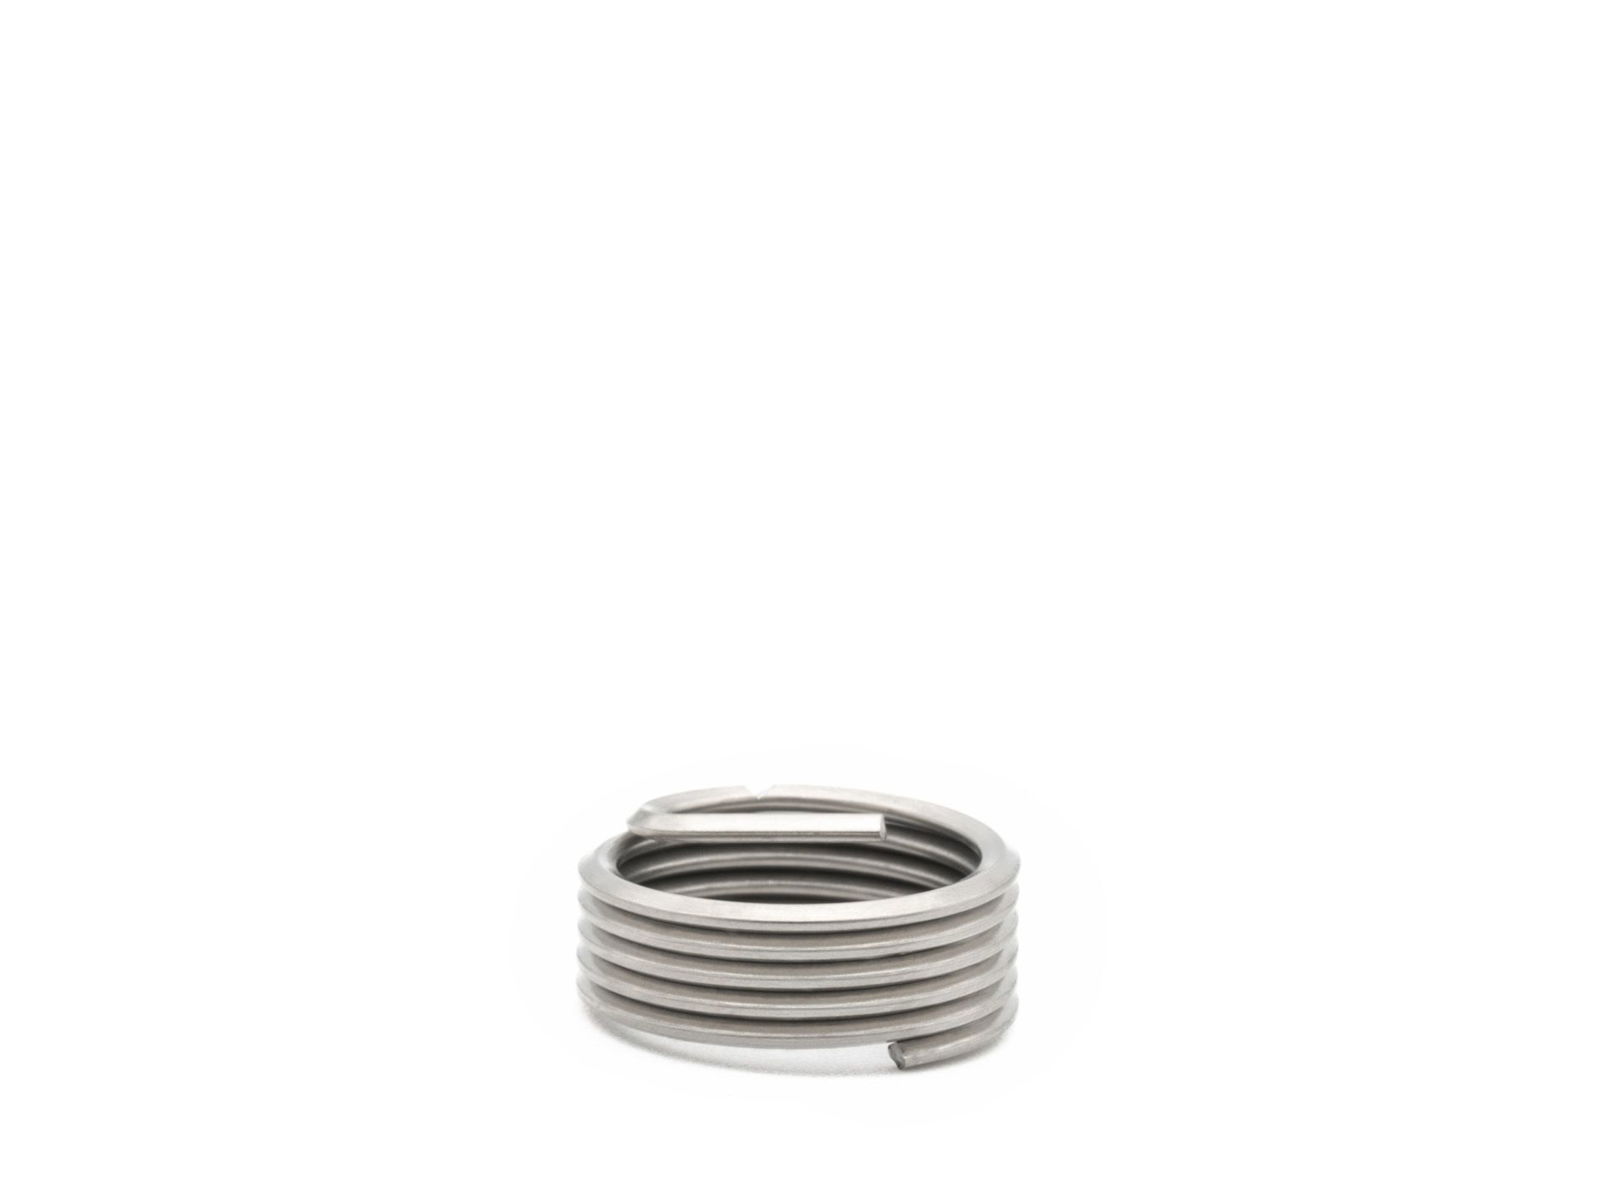 BaerCoil Wire Thread Inserts G (BSP) 5/8 x 14 - 1.5 D (23.81 mm) - free running - 10 pcs.